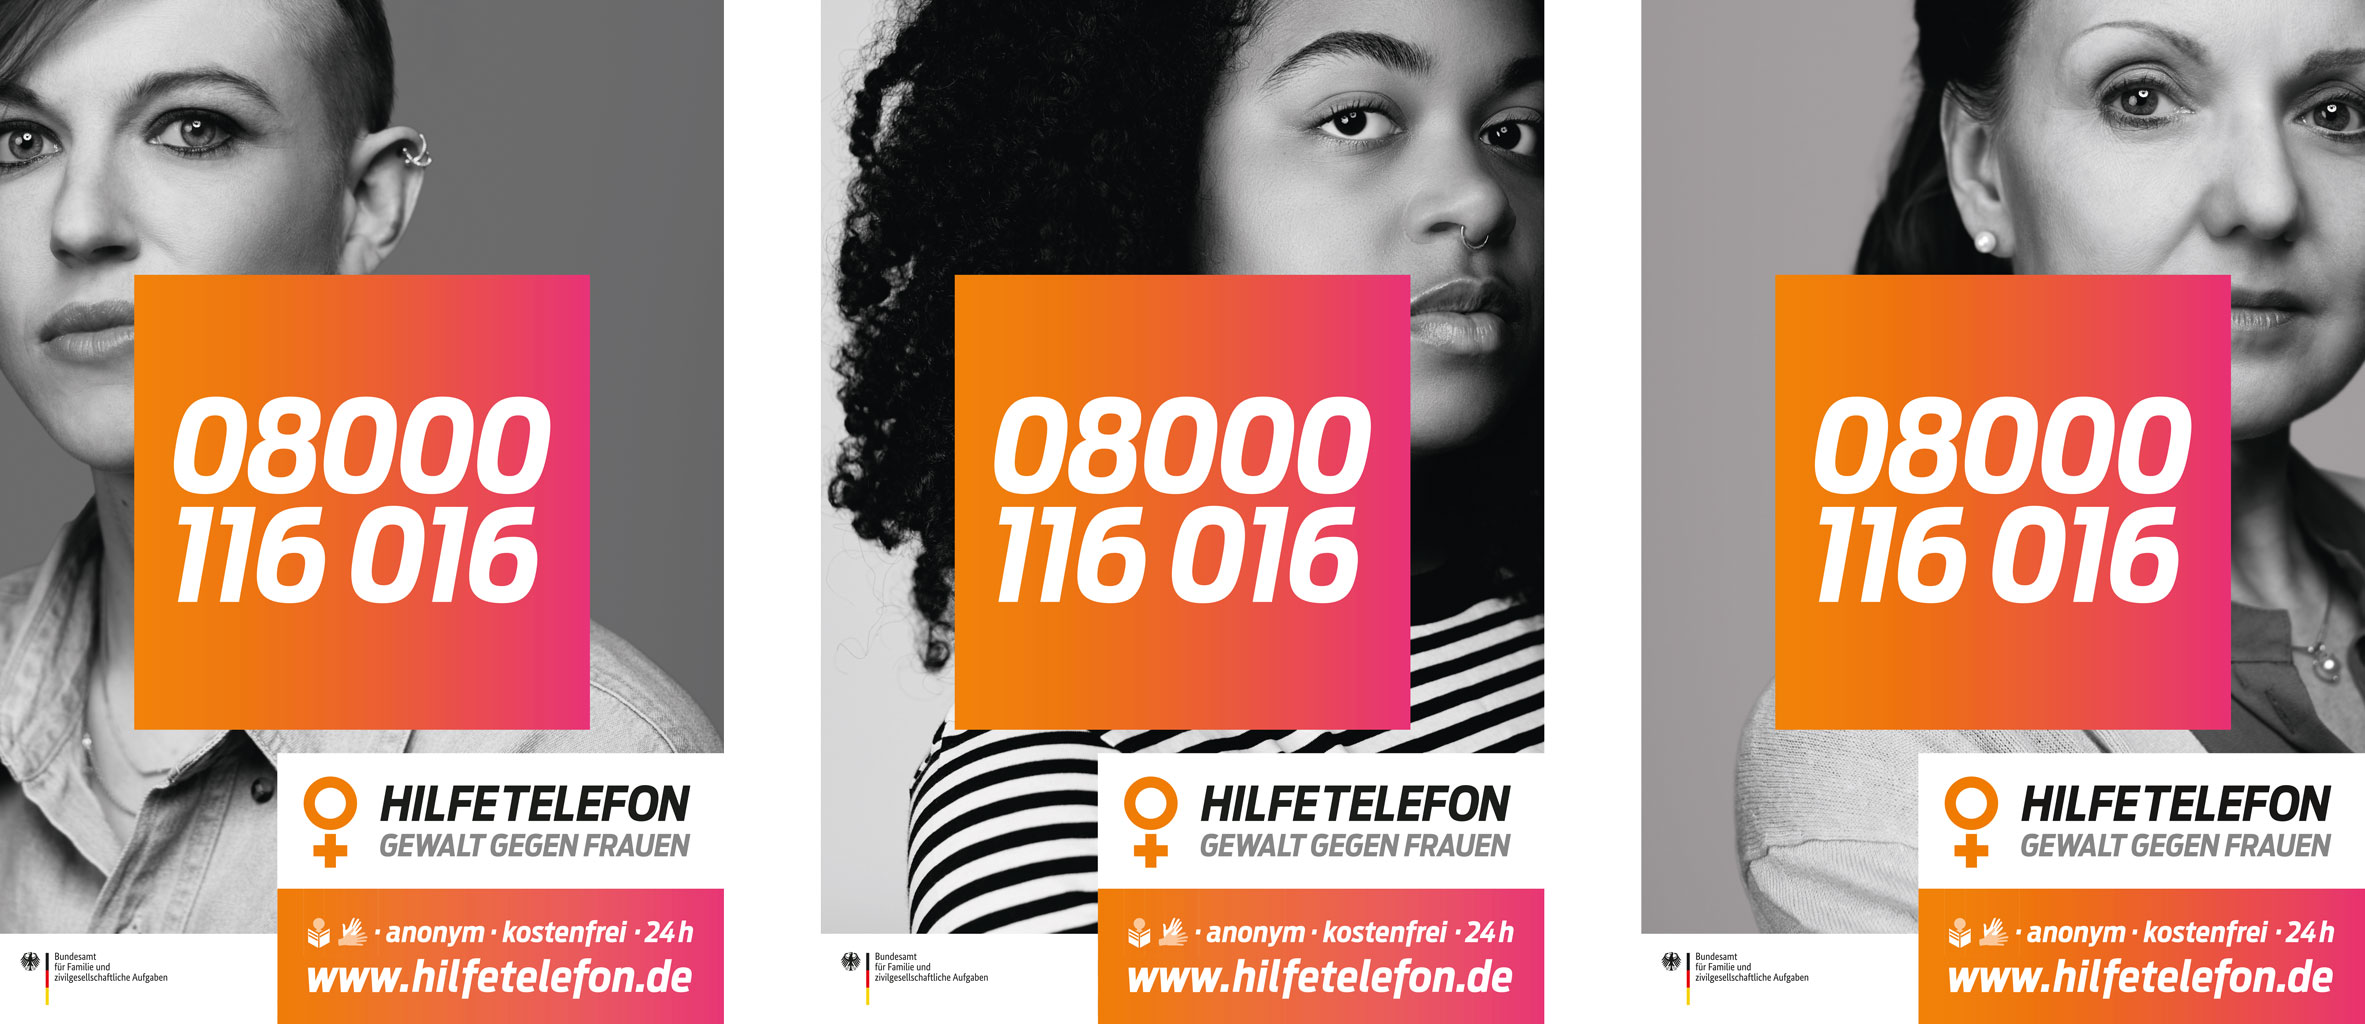 Drei Plakat-Motive der Hilfetelefon-Kampagne